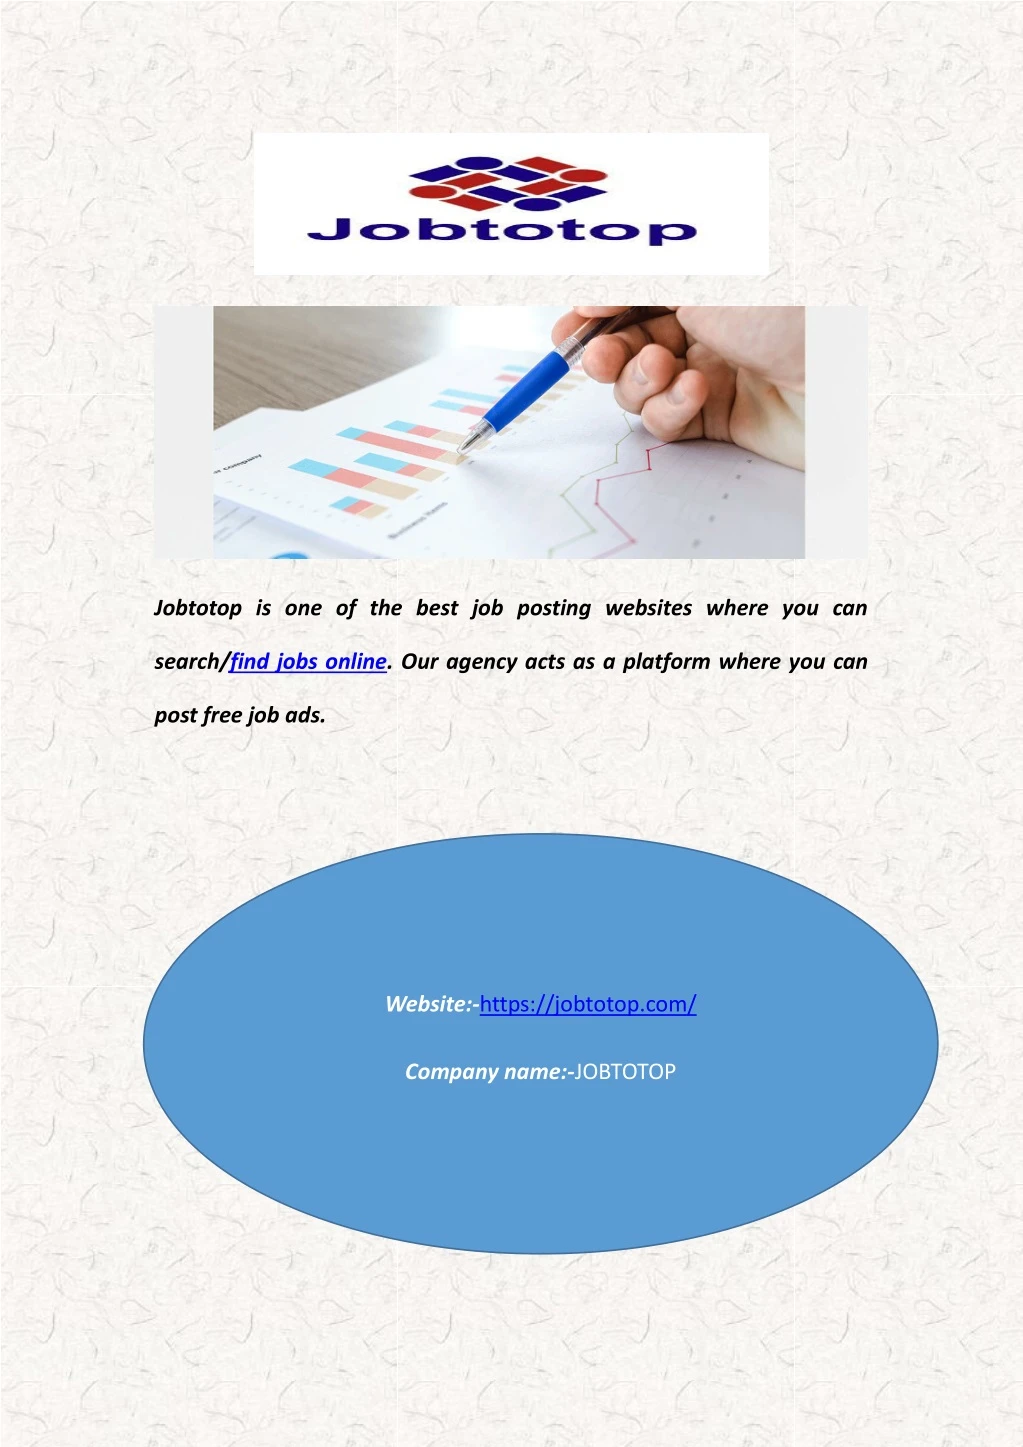 jobtotop is one of the best job posting websites